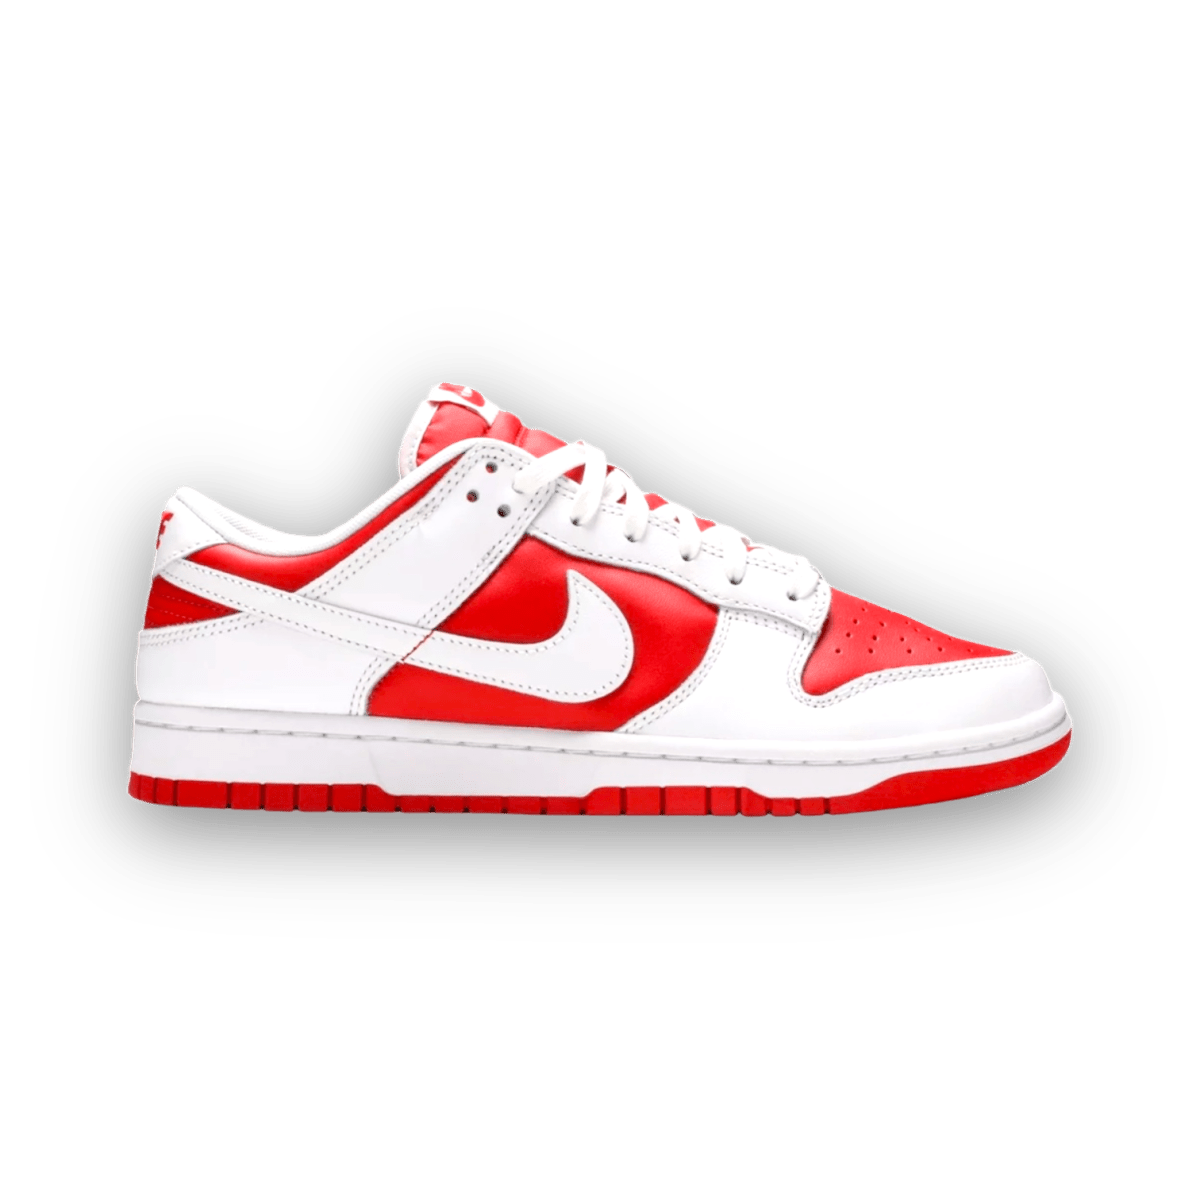 Dunk Low Championship Red - Low Sneaker - Jawns on Fire Sneakers & Streetwear